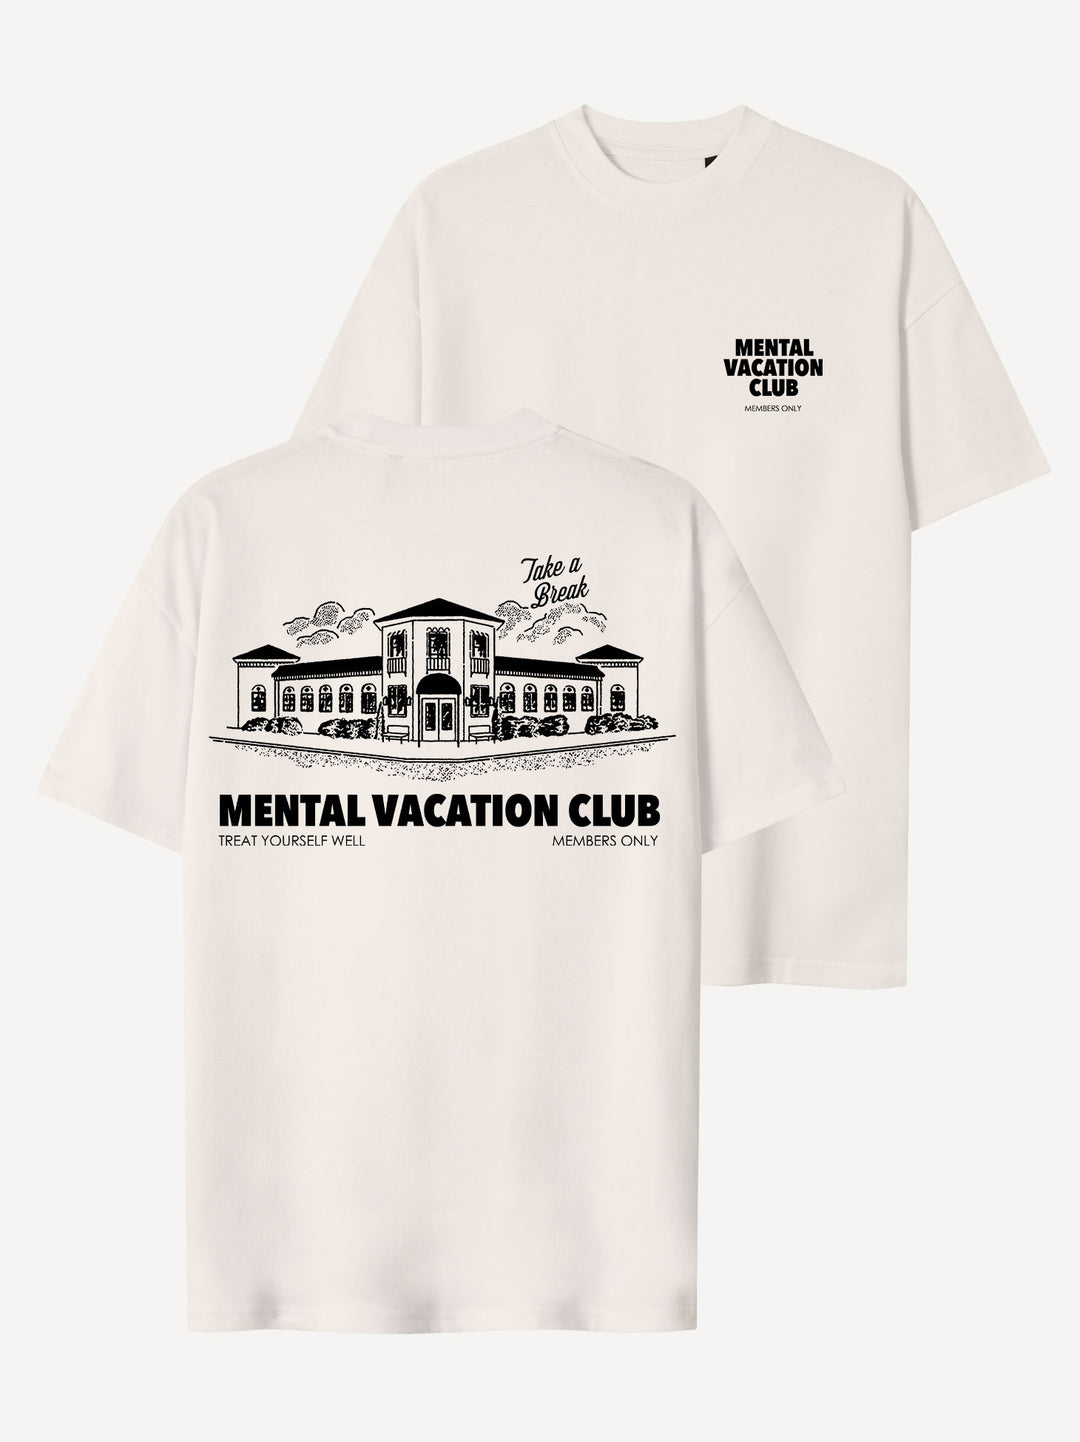 Mental Vacation Club T-Shirt